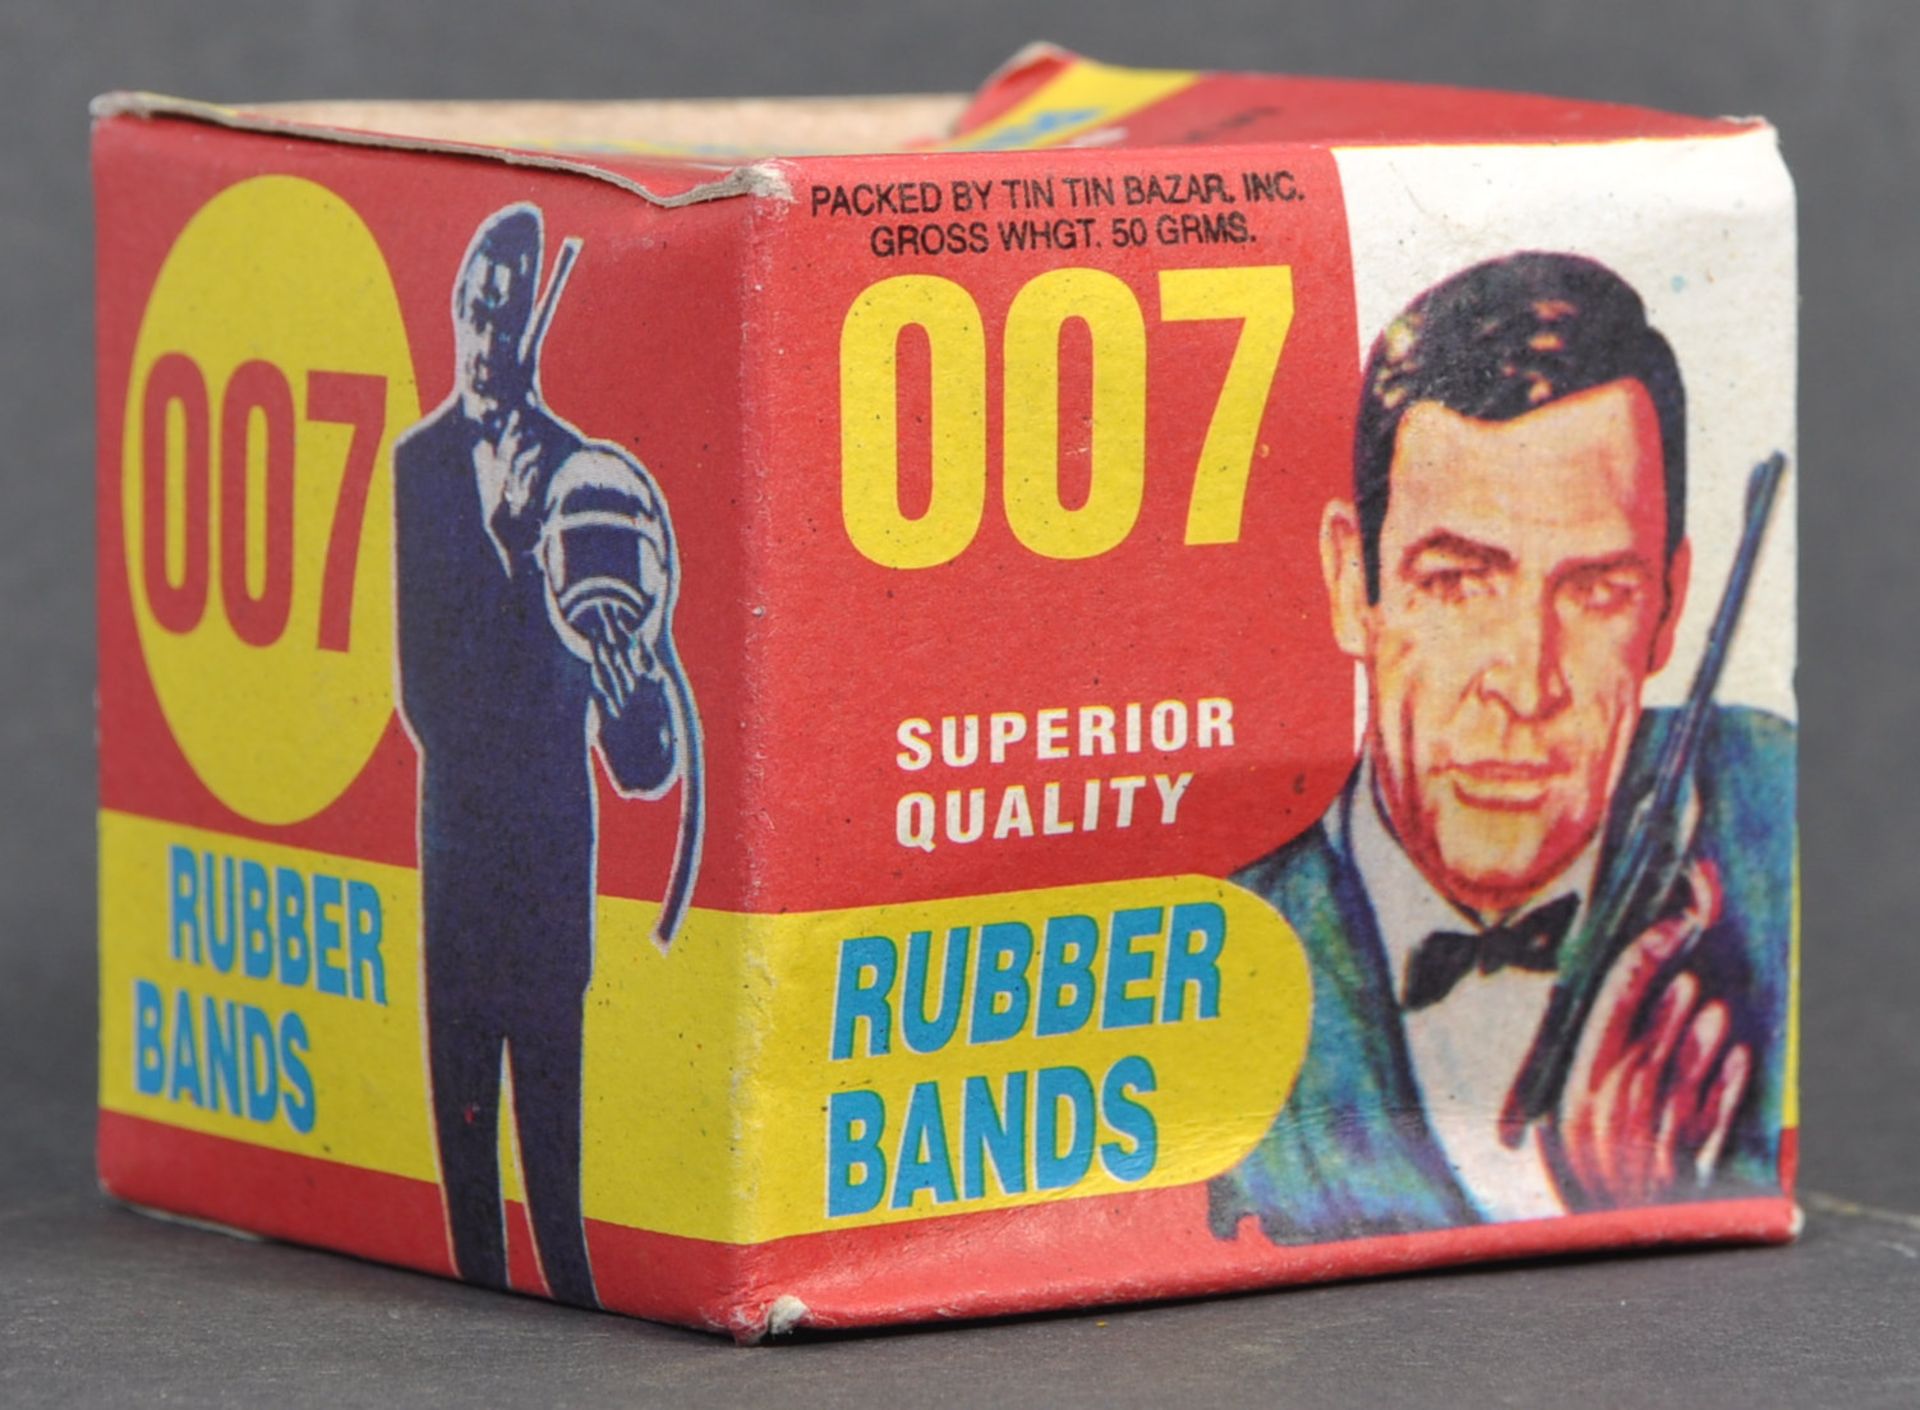 RARE VINTAGE JAMES BOND 007 ' RUBBER BANDS ' BOXED SET